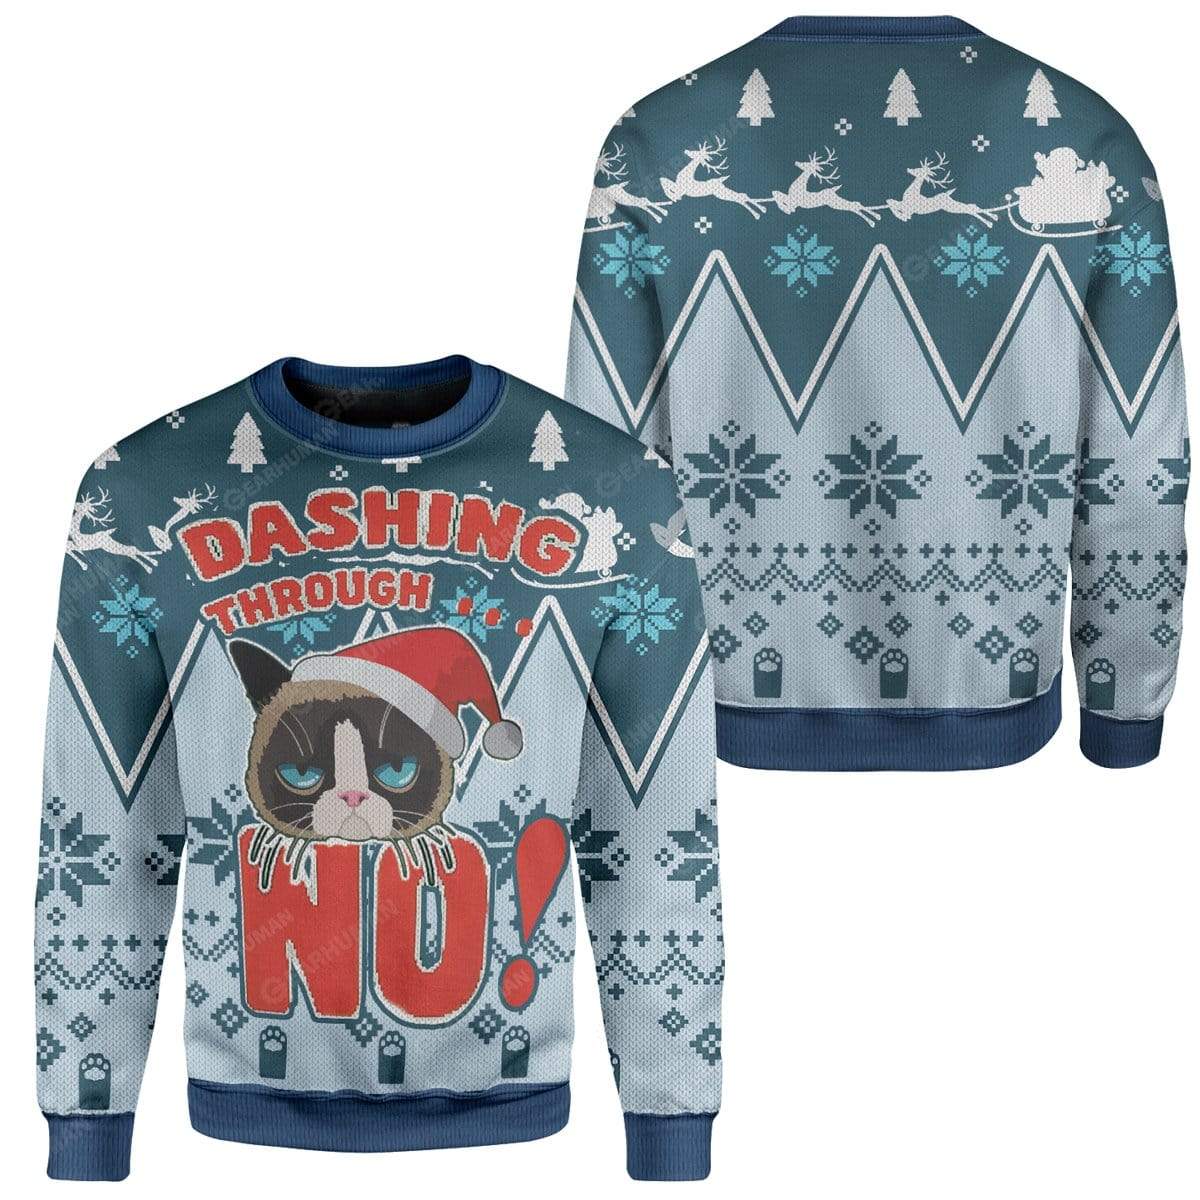 Ugly Christmas Dashing Through Grumpy Cat Custom Sweater Apparel HD-TA22111911 Ugly Christmas Sweater 